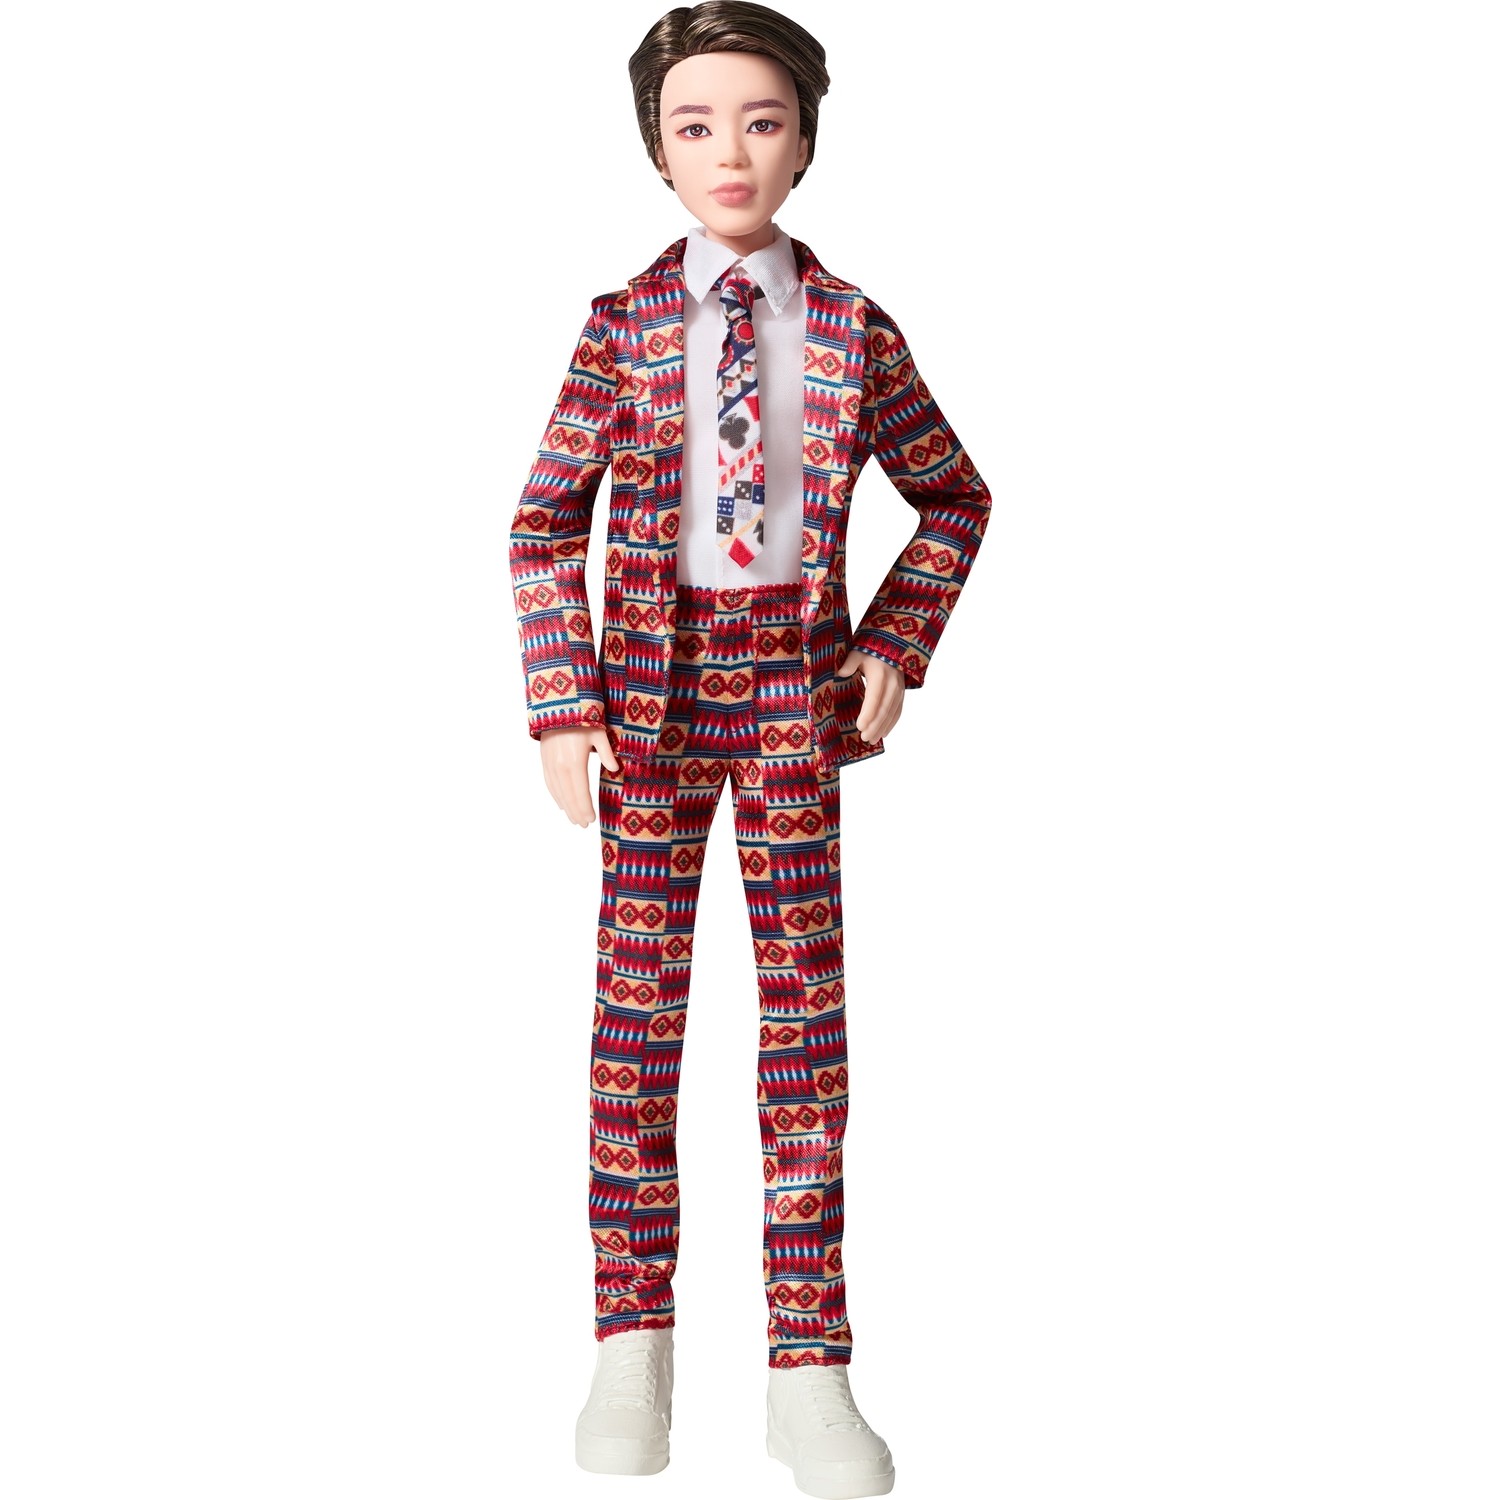 Кукла Jimin Fashion Doll певец из группы BTS кукла монстер хай купидон мои сладкие 1600 mattel